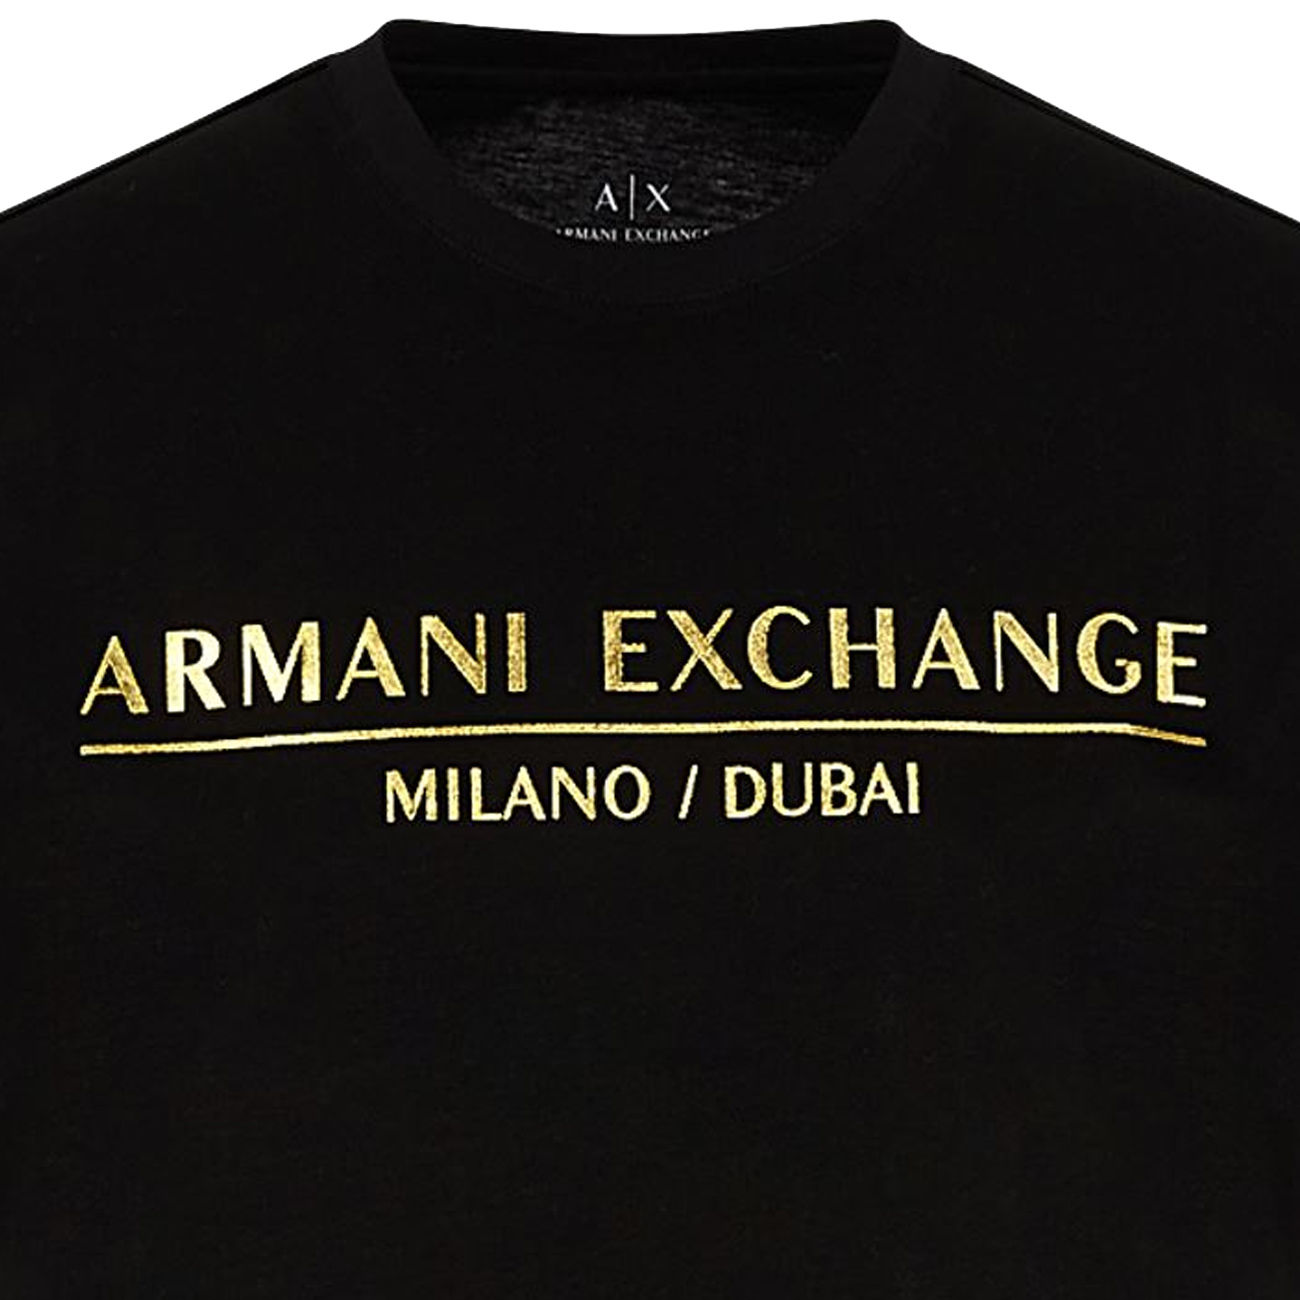 black t shirt armani